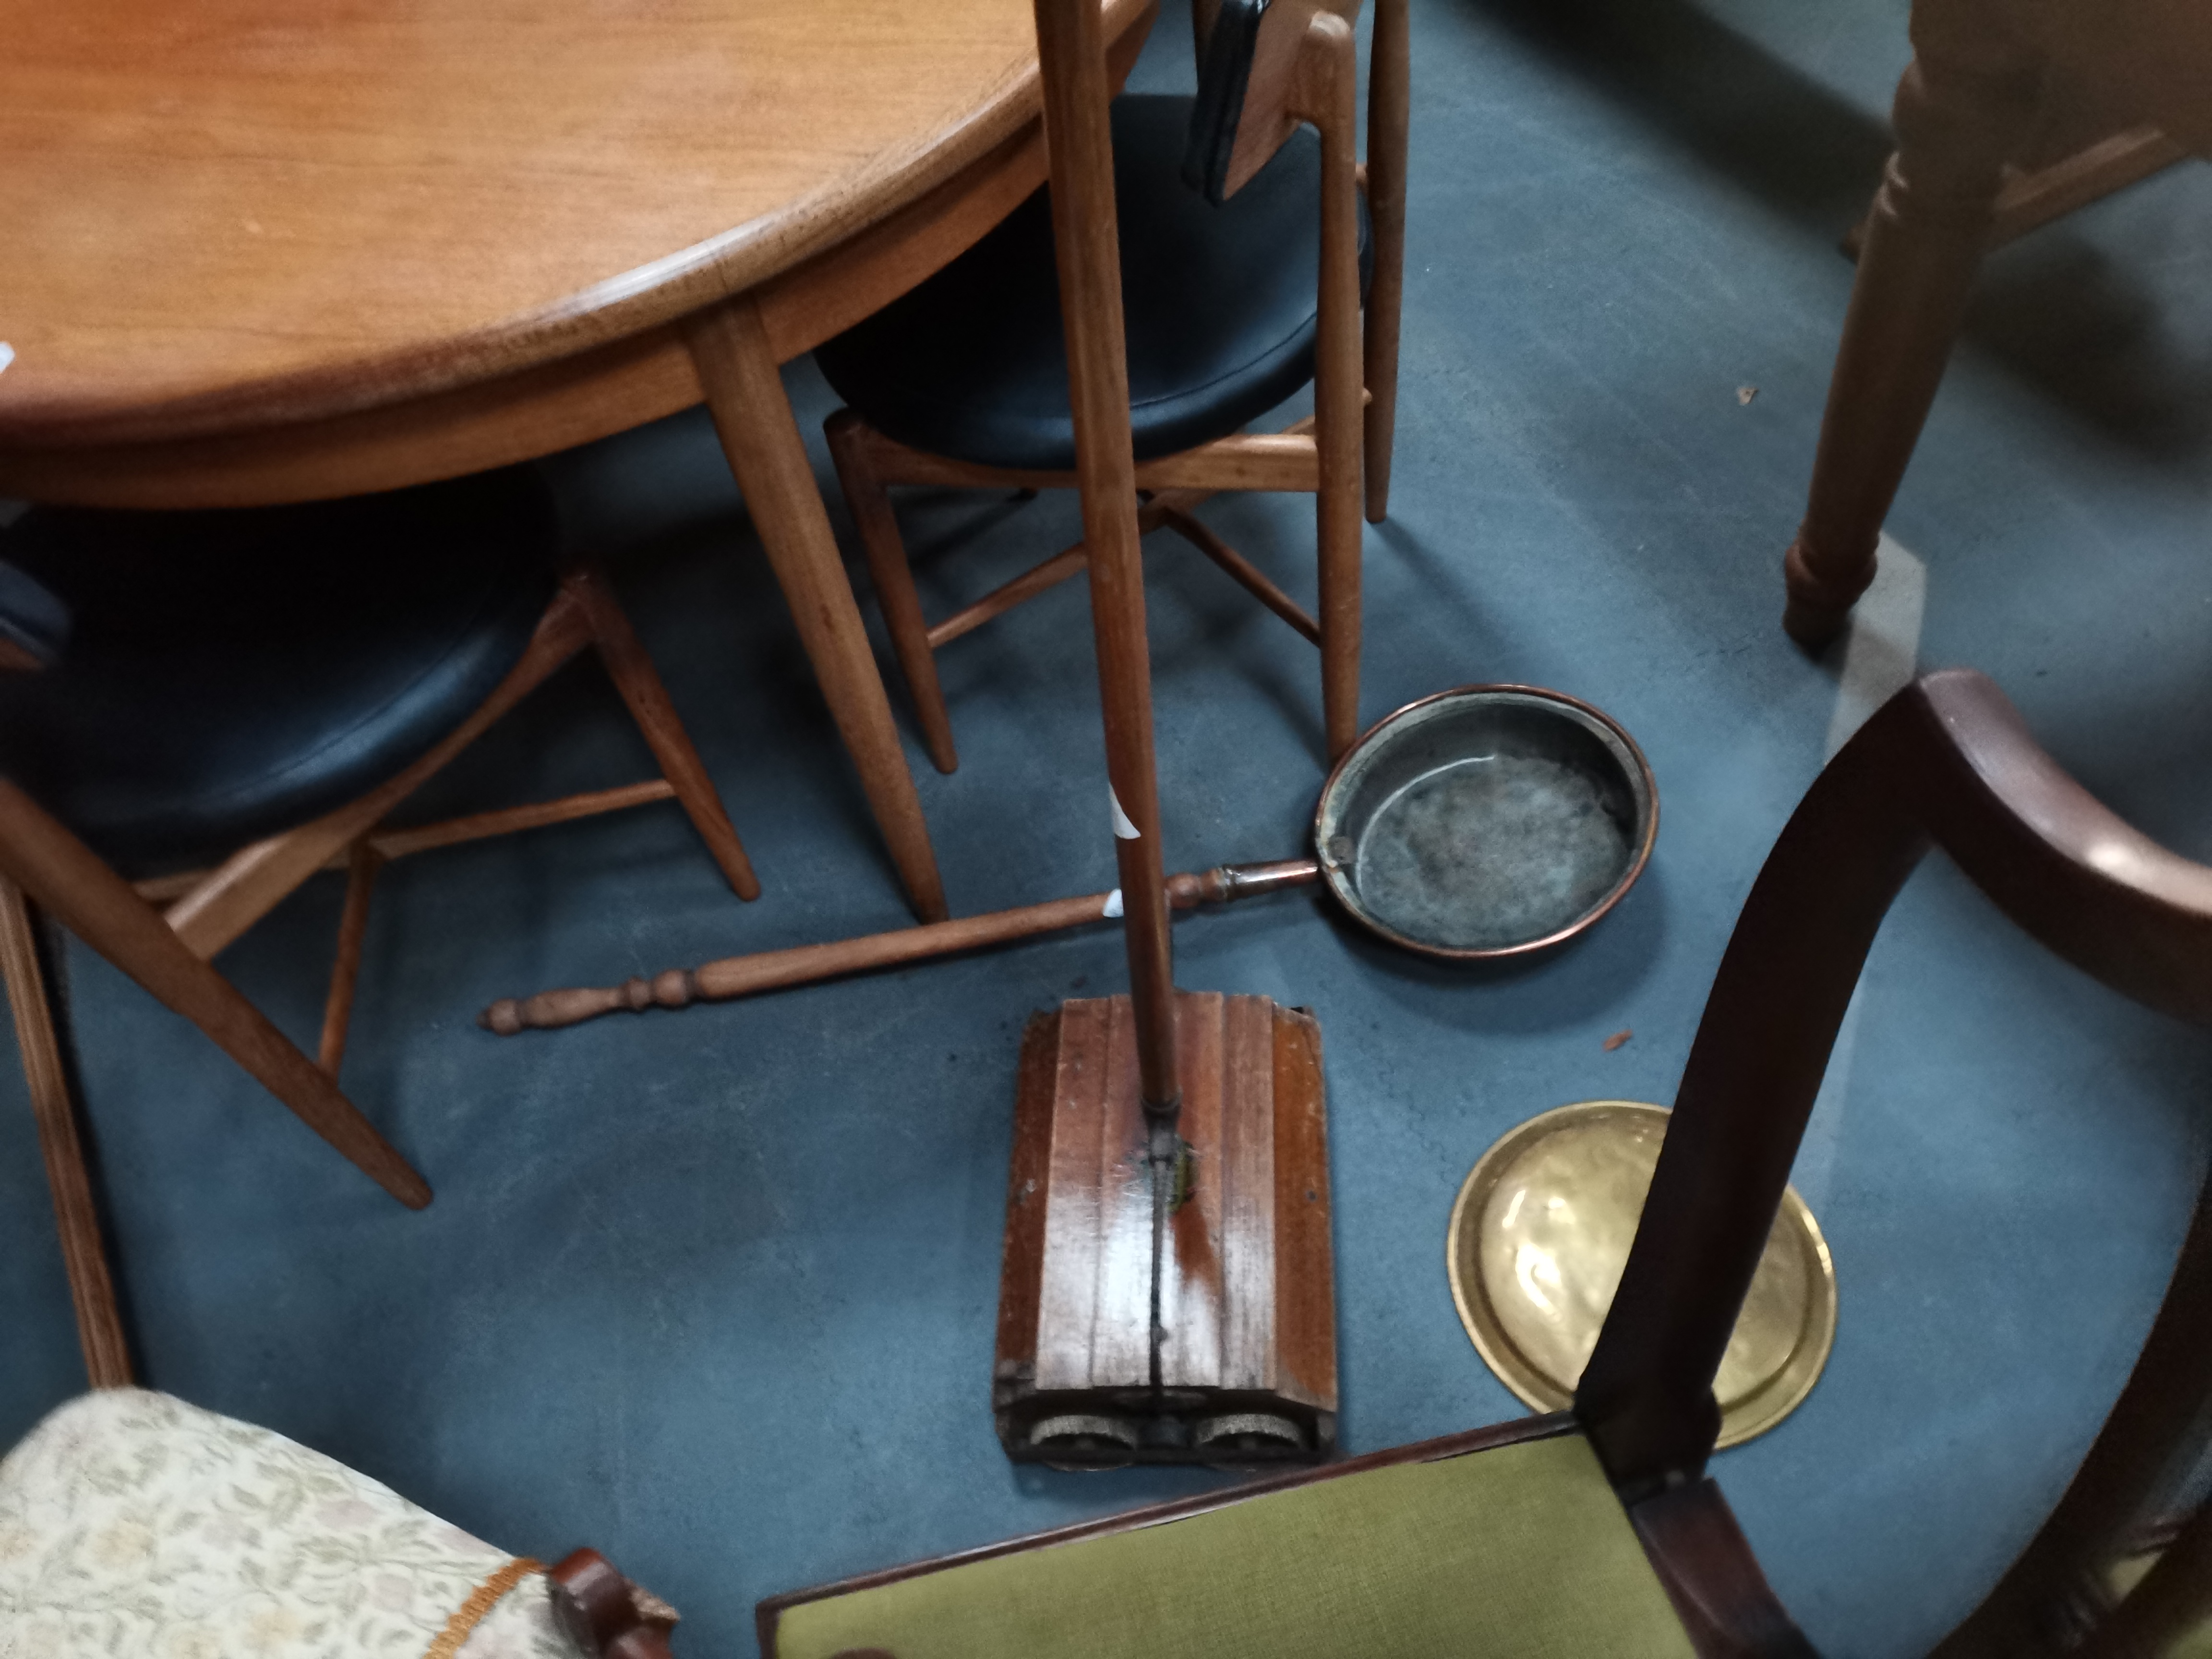 Vintage carpet sweeper and warming pan